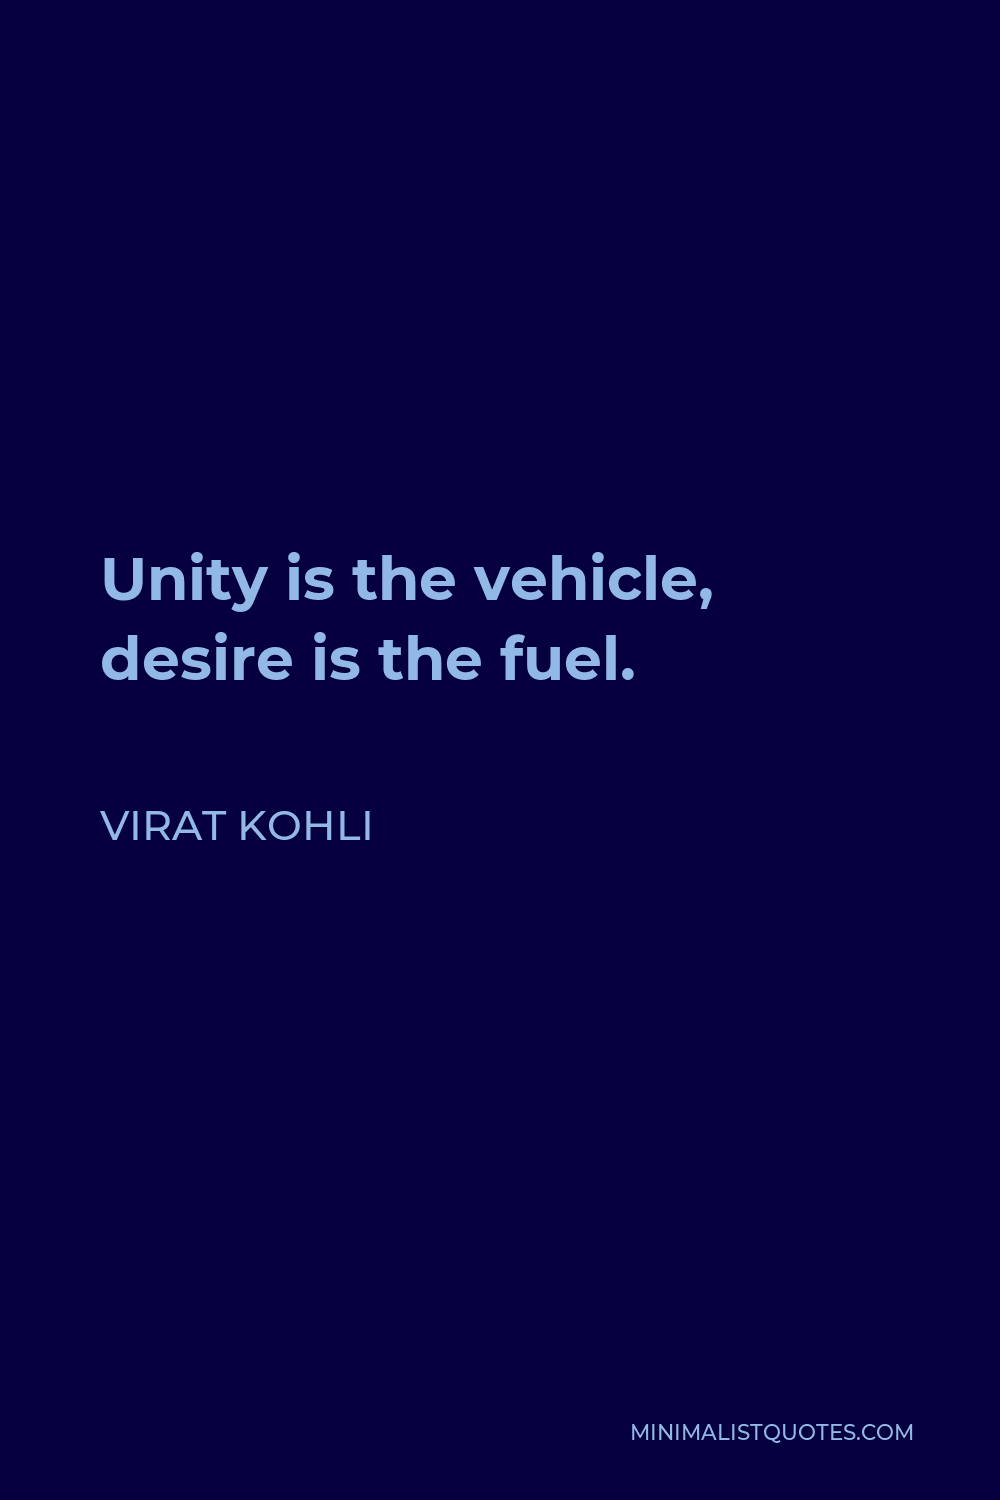 Virat Kohli Quote - Unity is the vehicle, desire is the fuel.